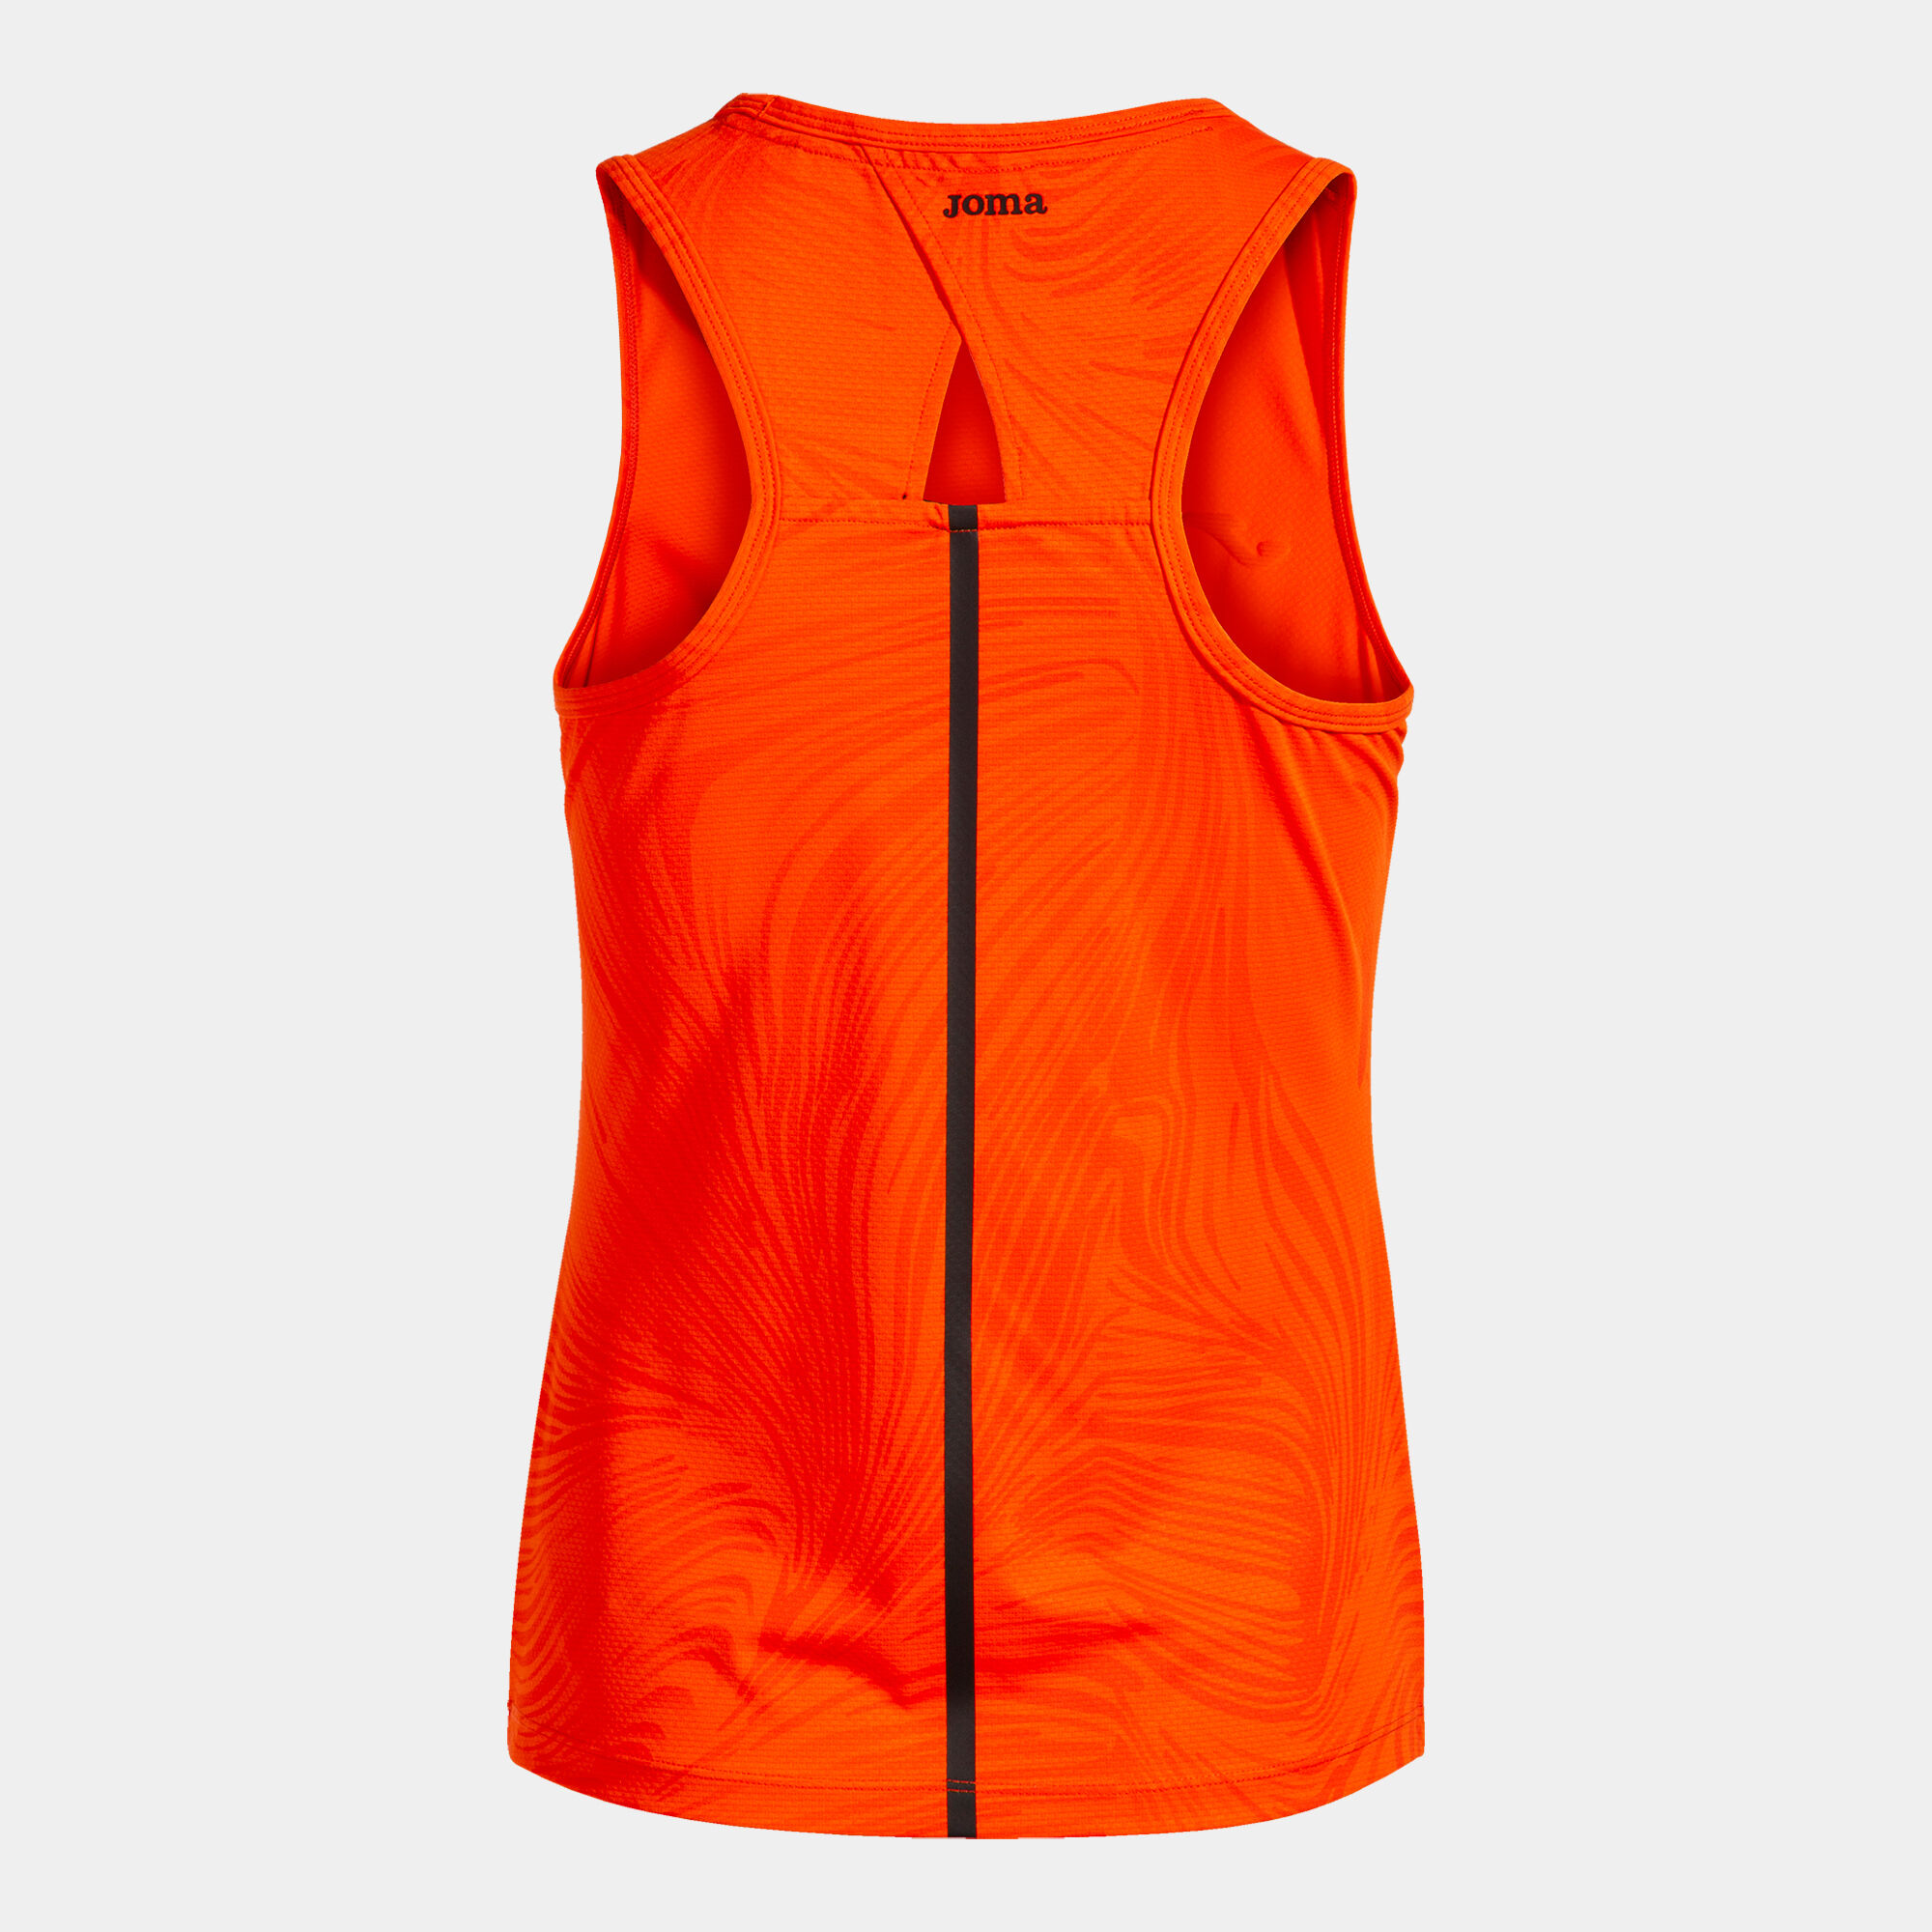 Shirt s/m frau Challenge orange